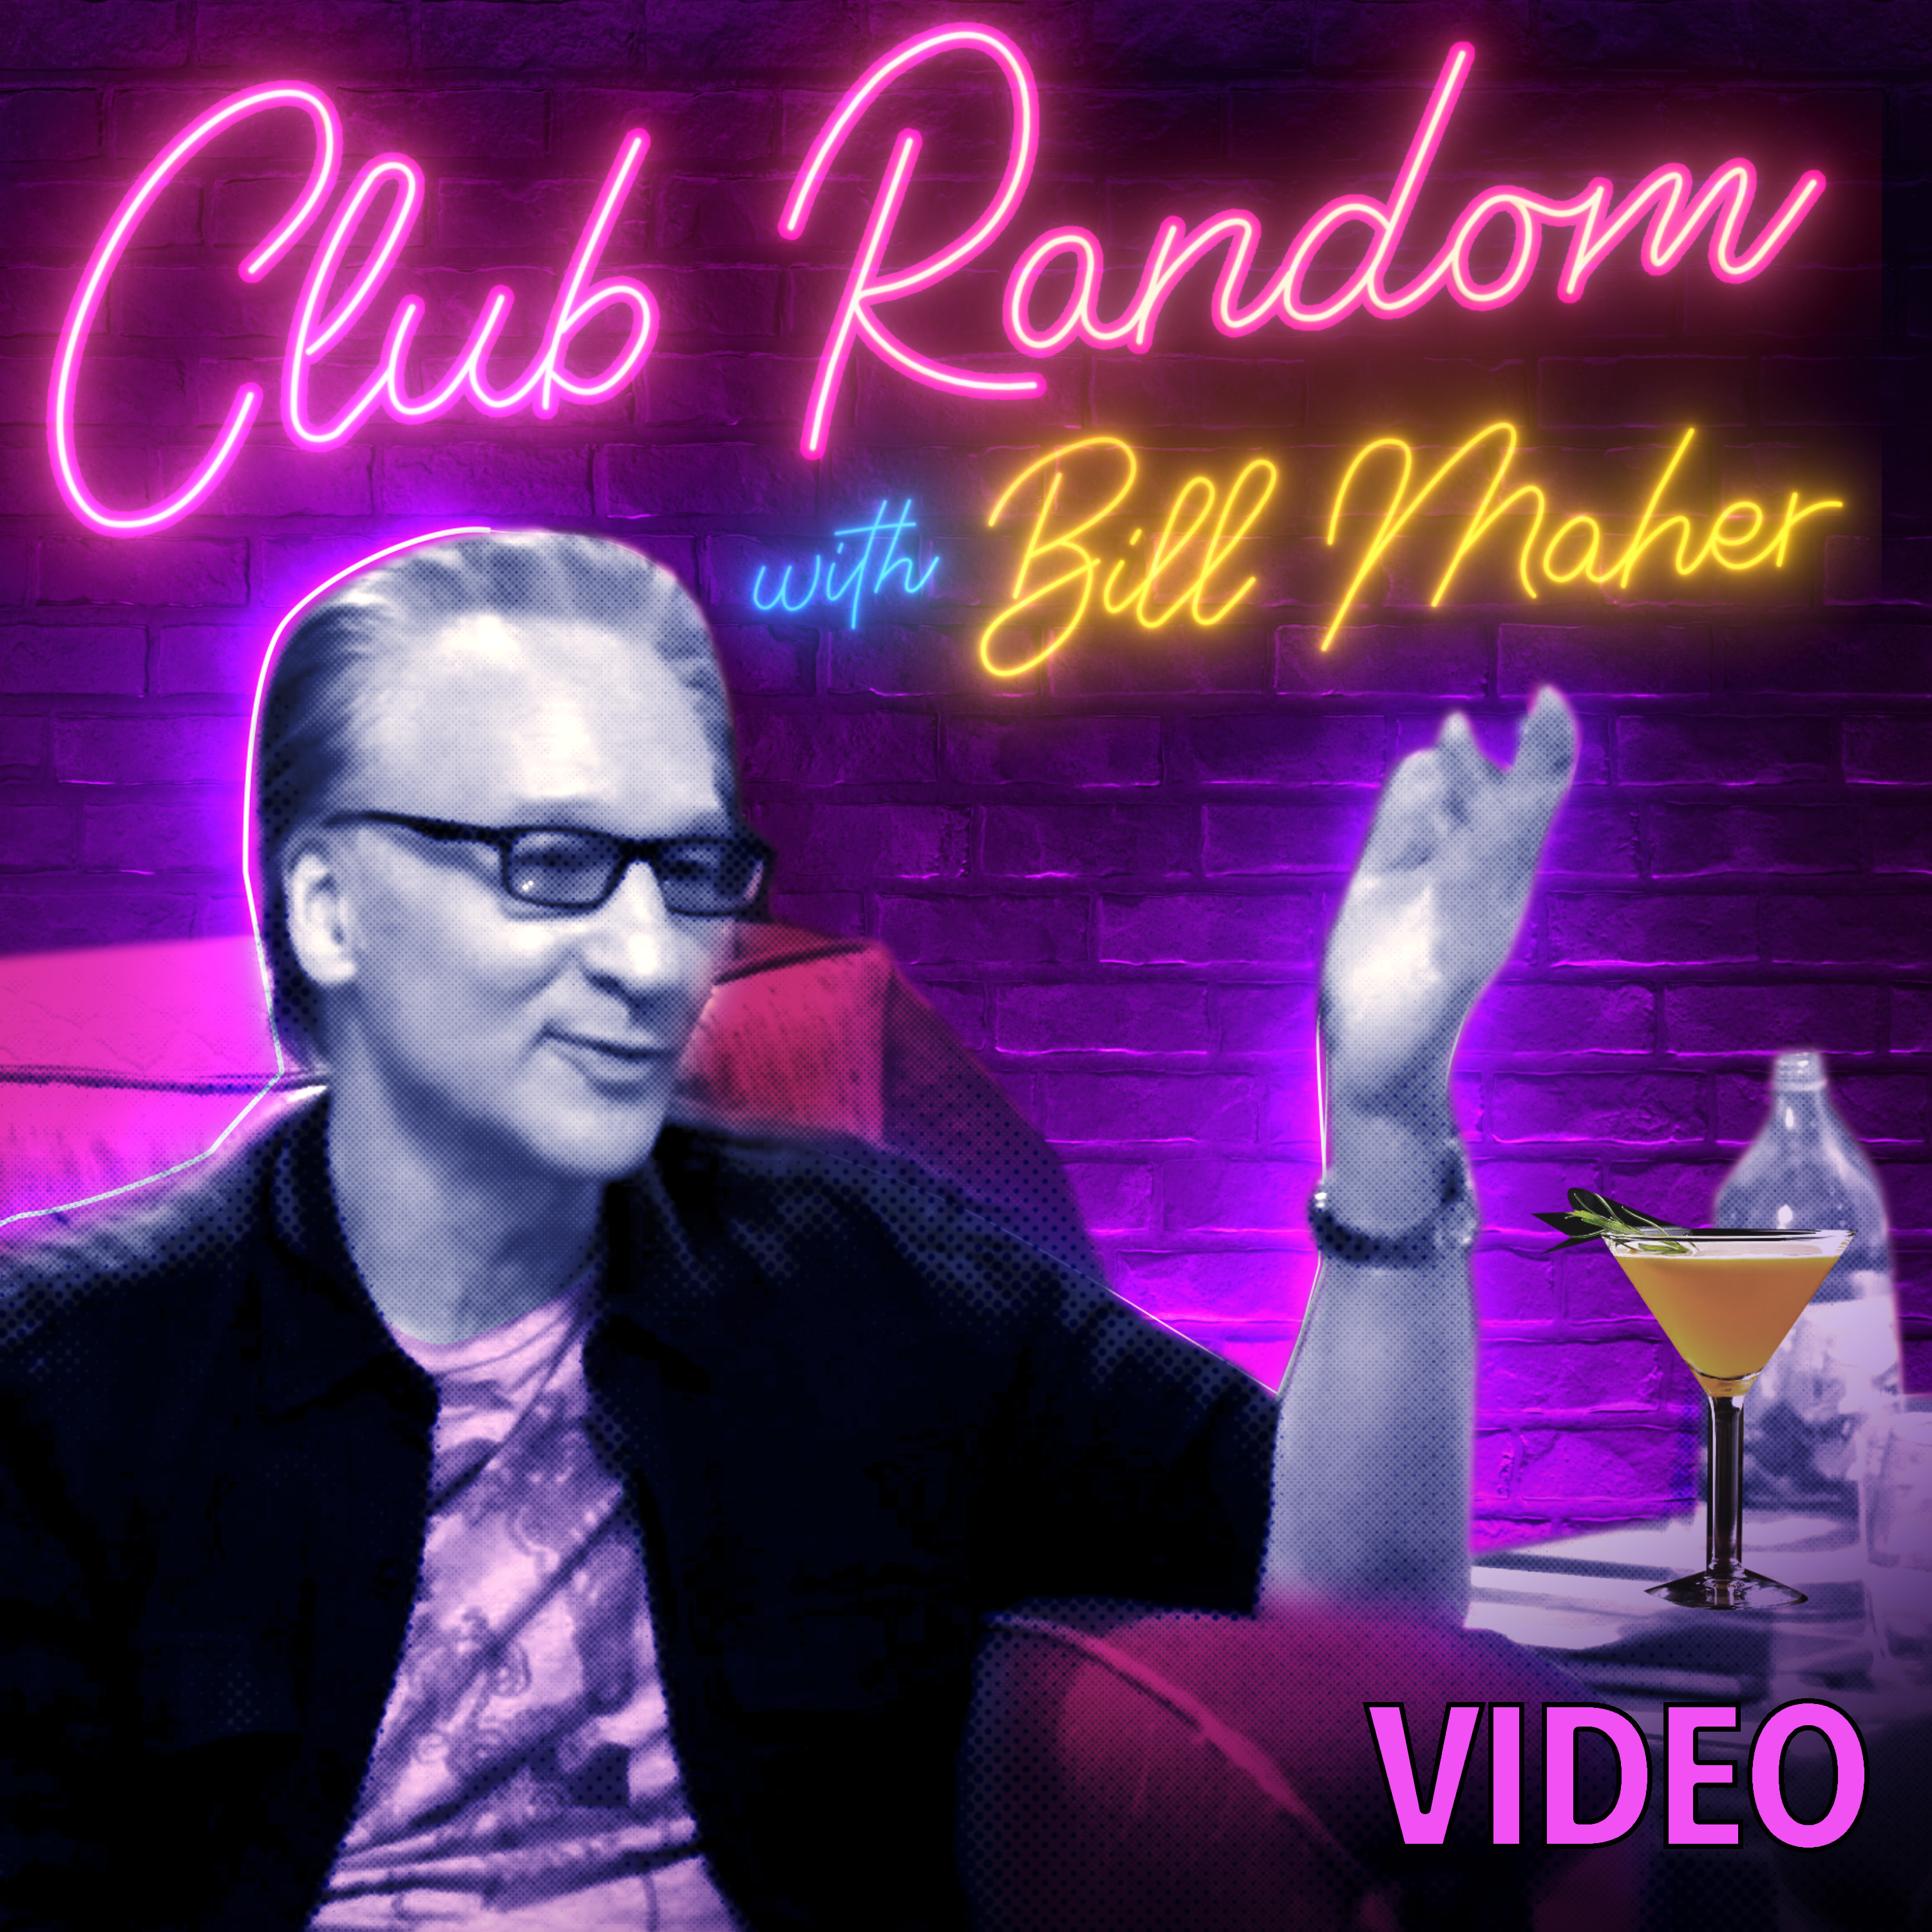 Video: Fran Lebowitz |Club Random with Bill Maher